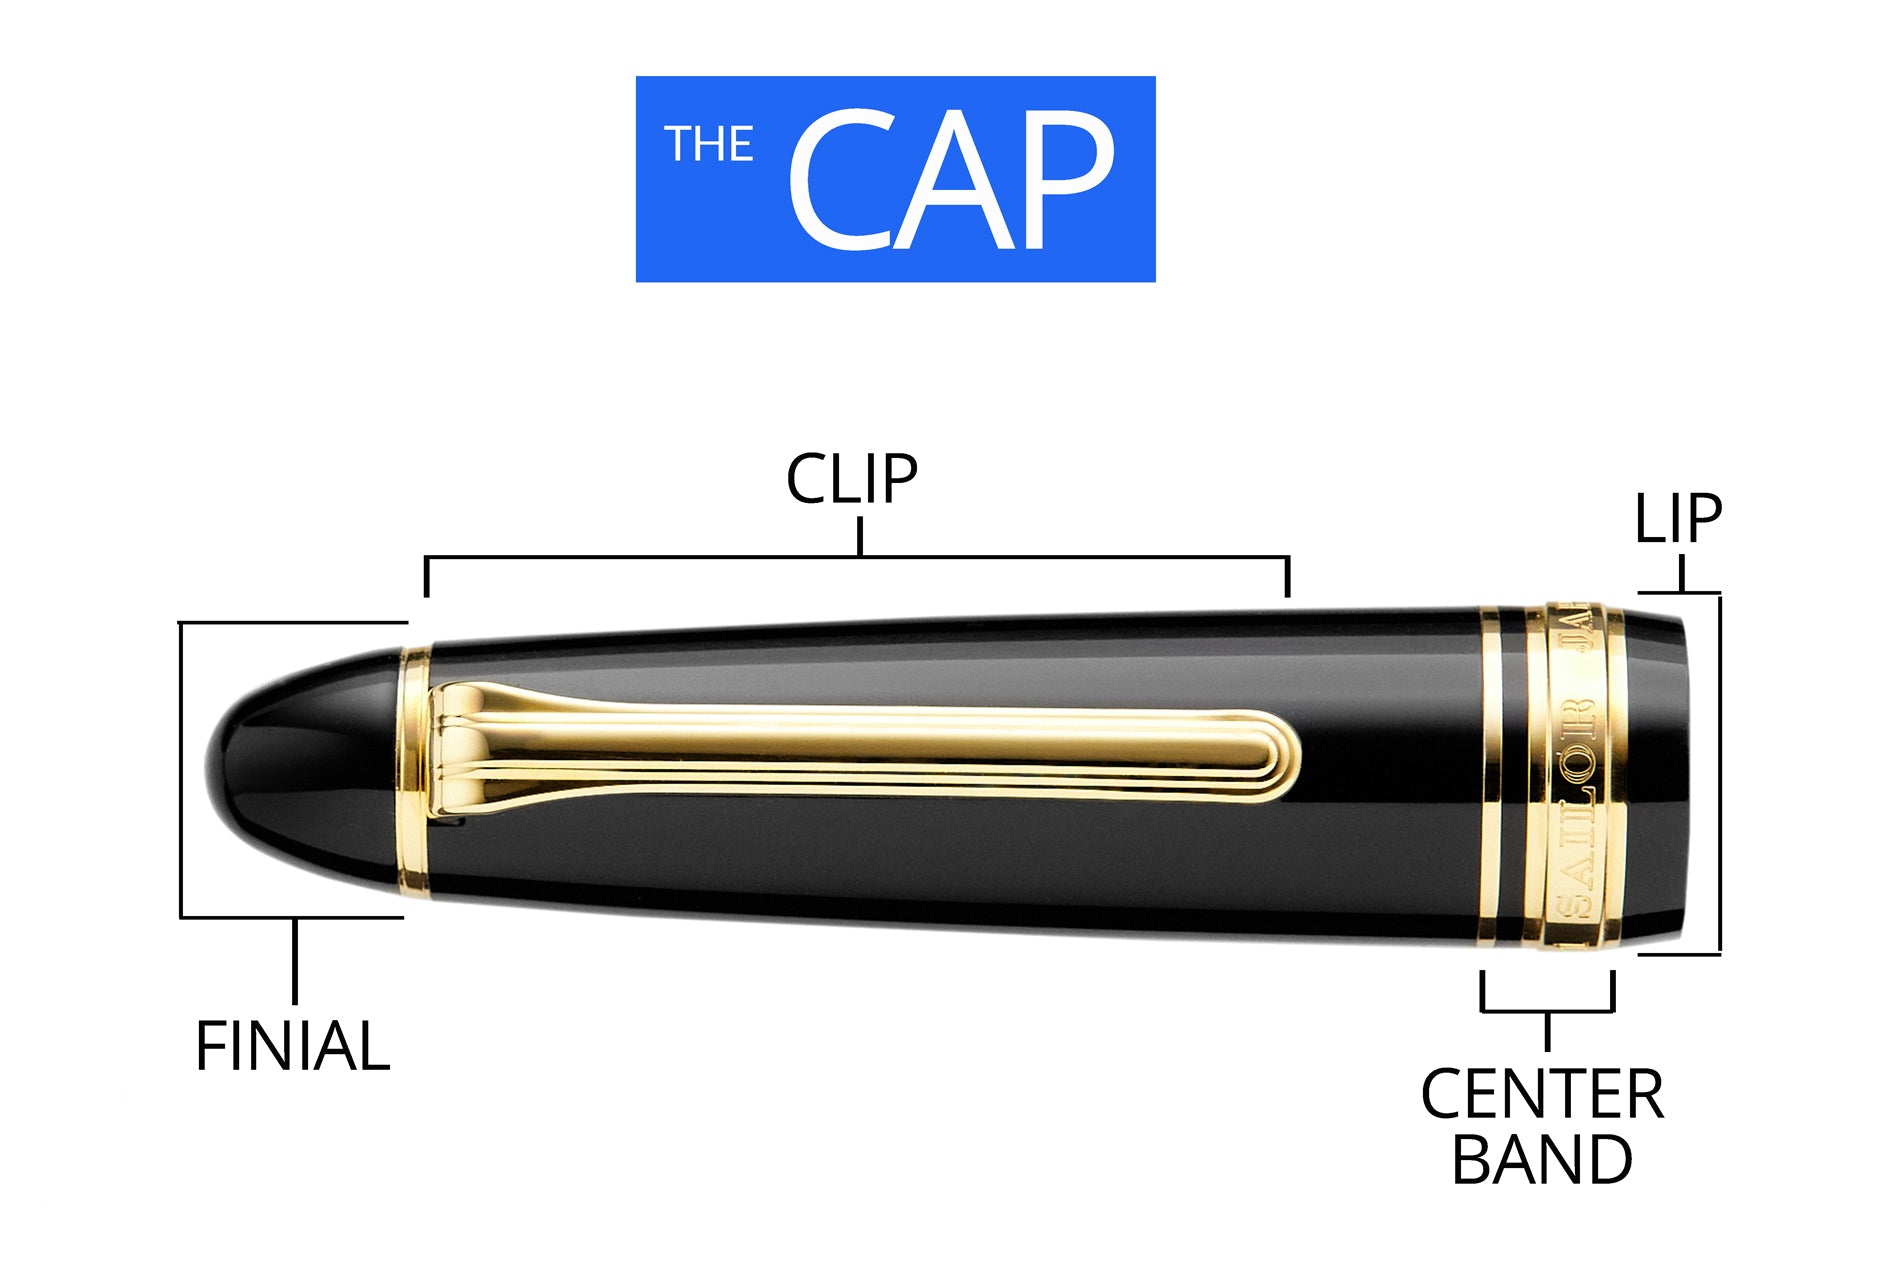 Anatomy of a Fountain Pen - The Goulet Pen Company